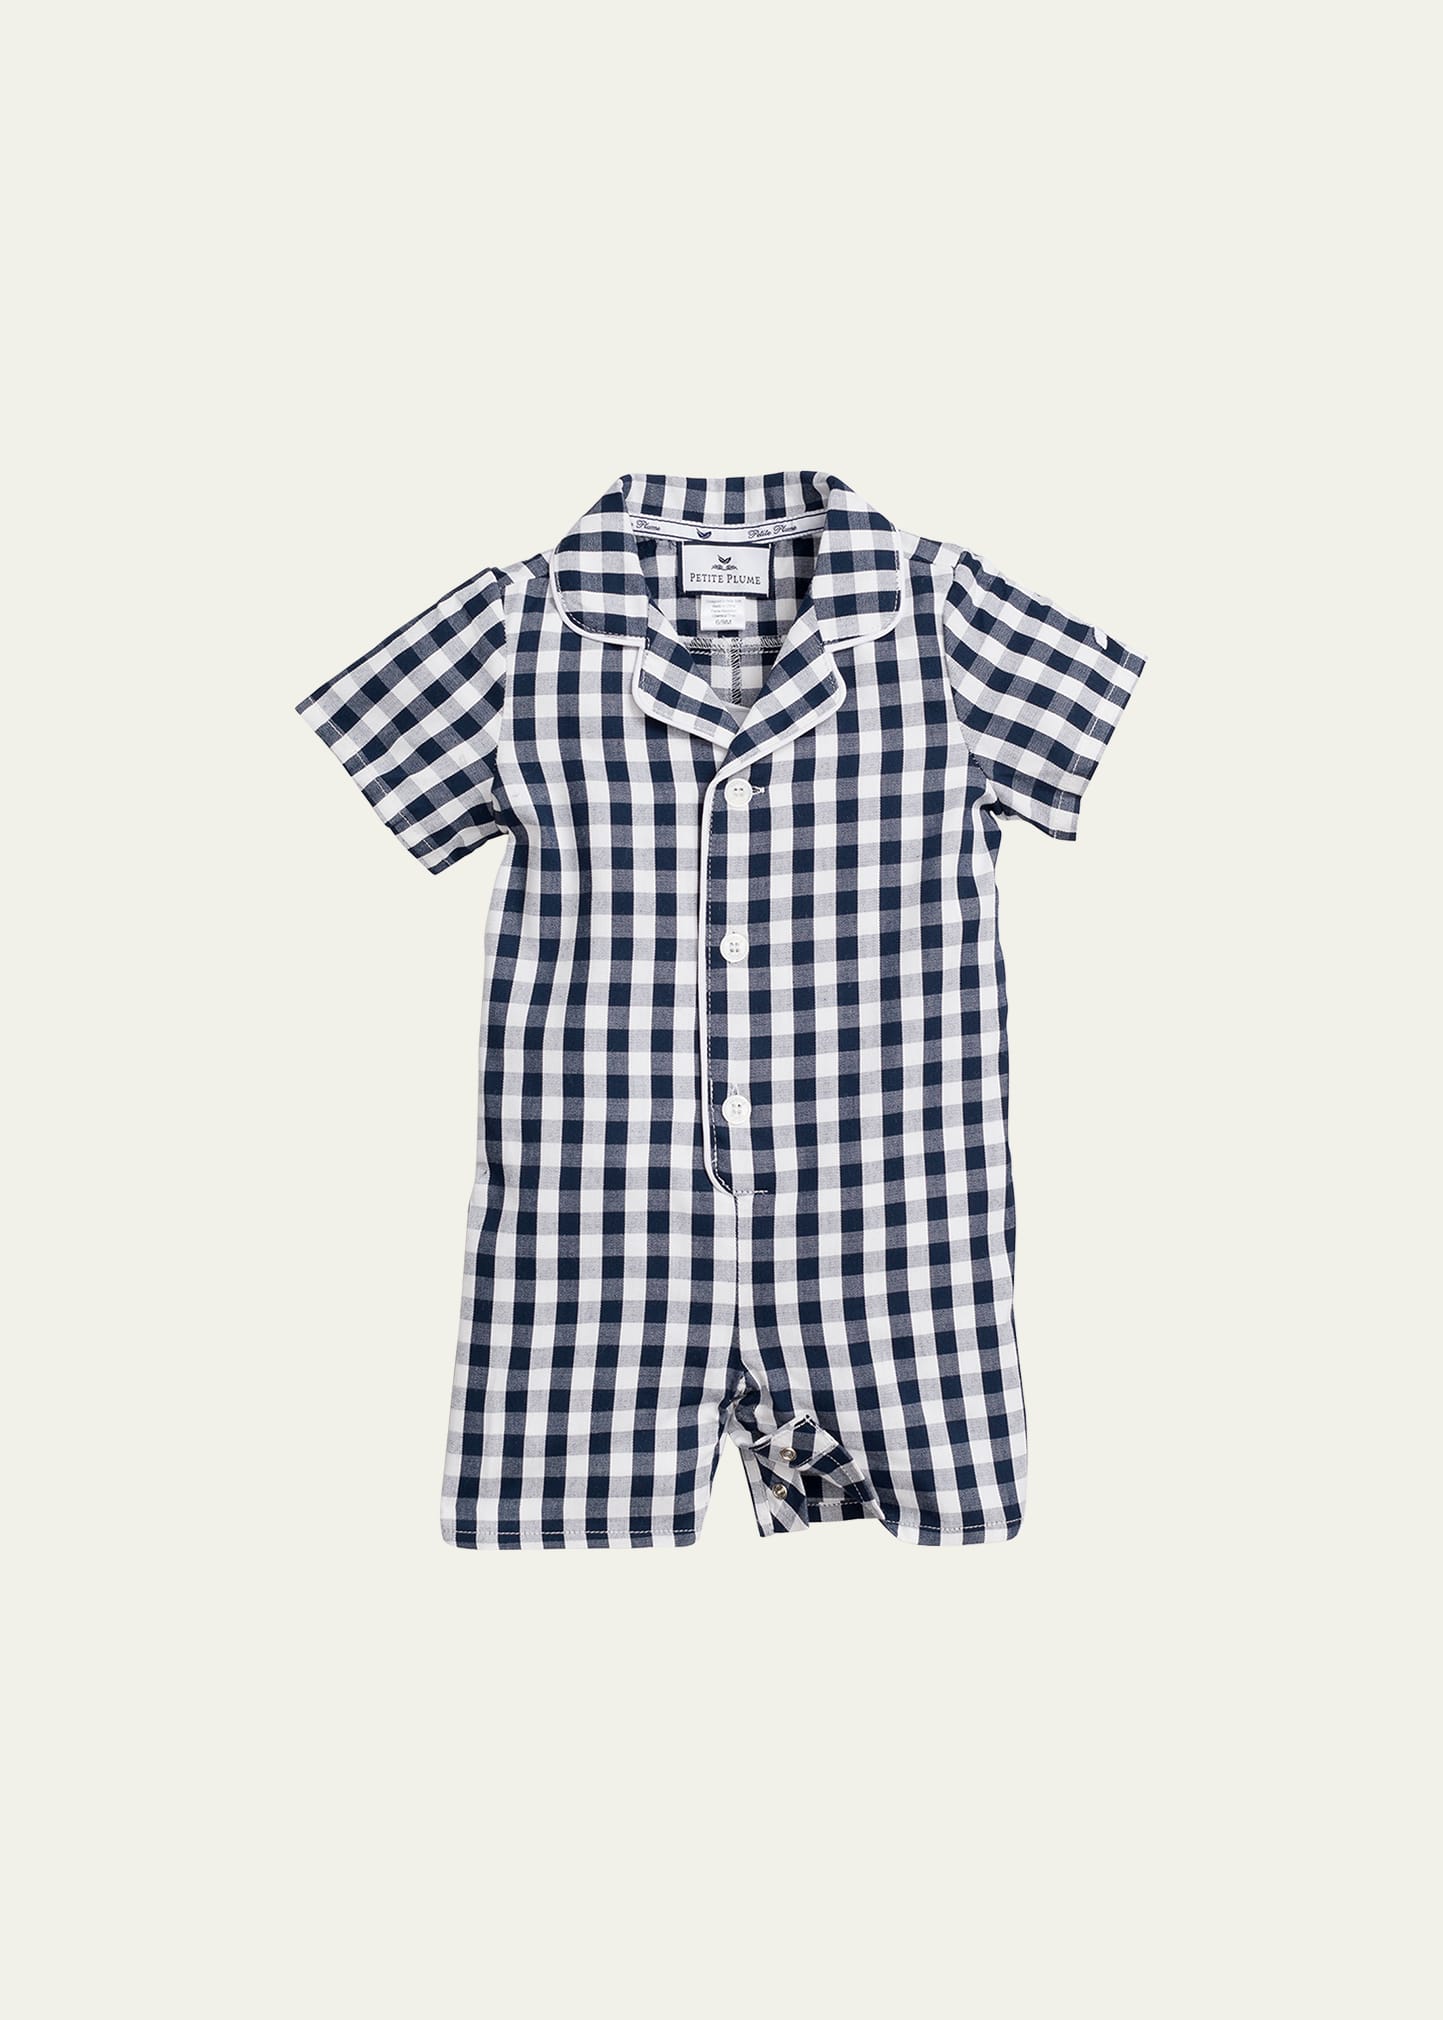 Boy's Navy Gingham Pajama Set, Size 6M-14